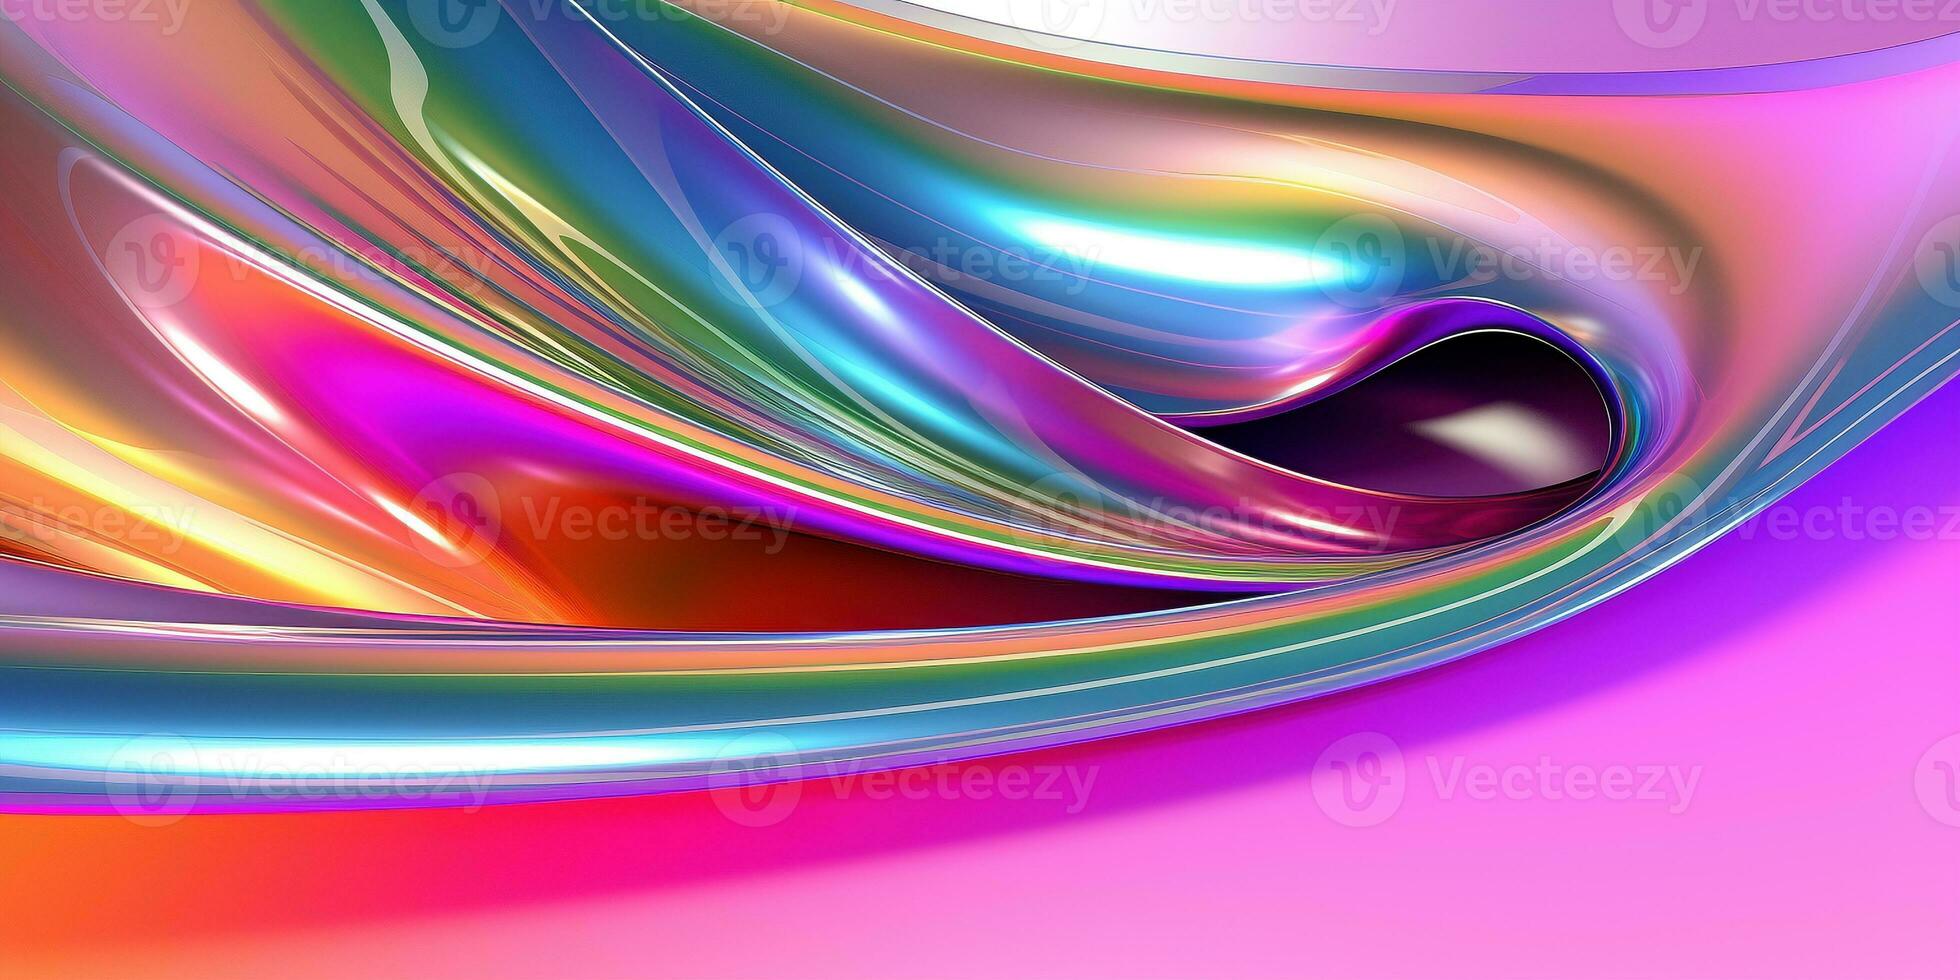 metalen regenboog helling golven abstract achtergrond. iriserend chroom golvend oppervlak. vloeistof oppervlak, rimpelingen, reflecties. 3d geven illustratie. foto